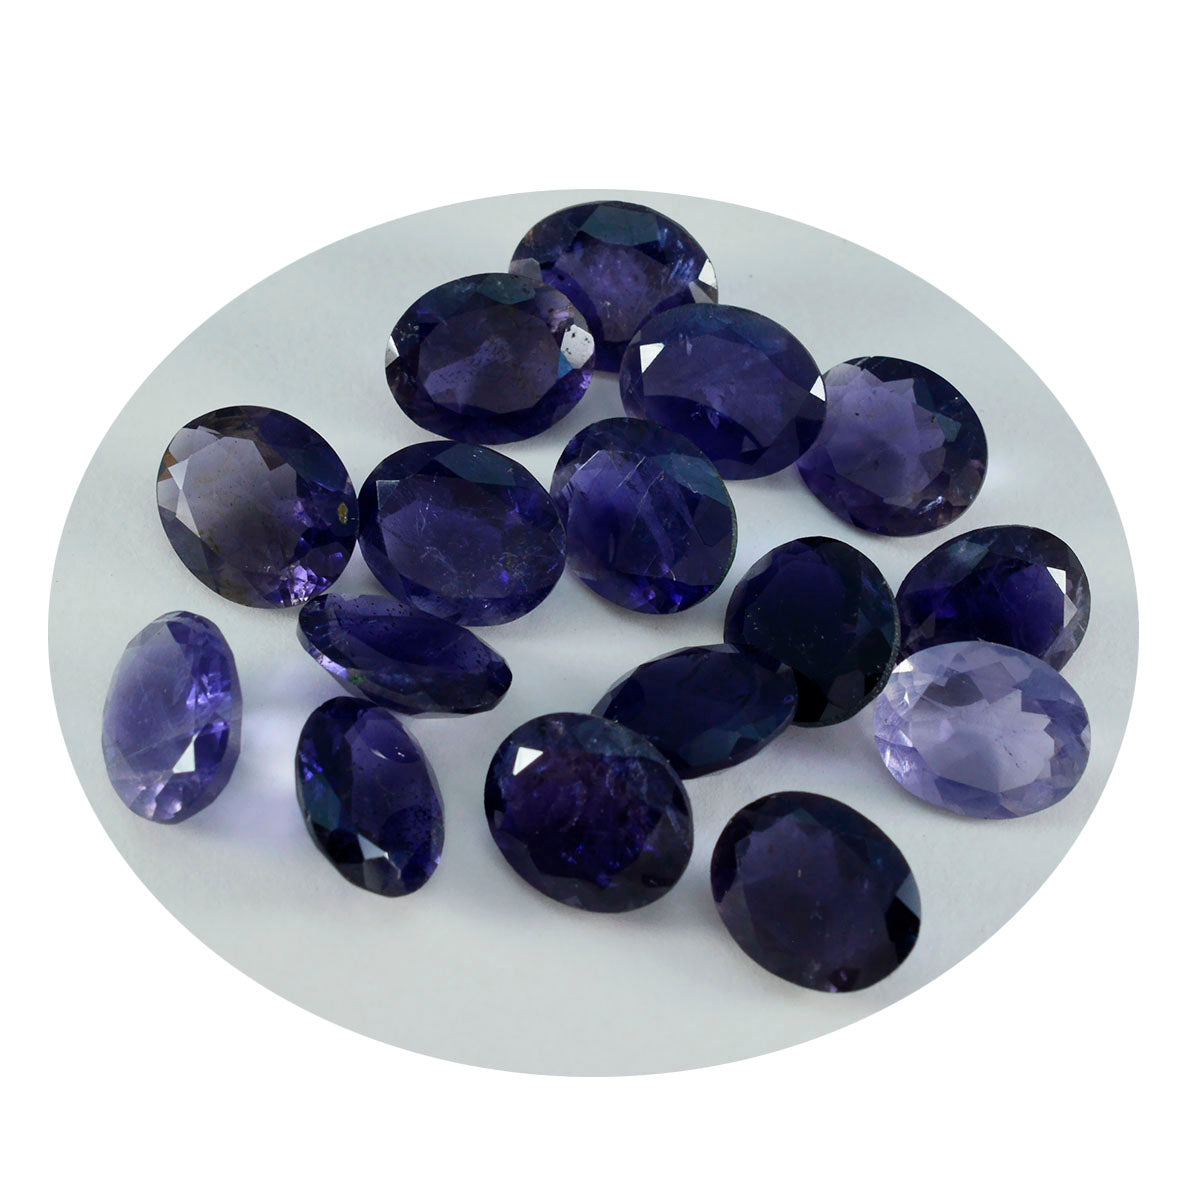 Riyogems 1PC blauwe ioliet gefacetteerde 6x8 mm ovale vorm schattige kwaliteitssteen